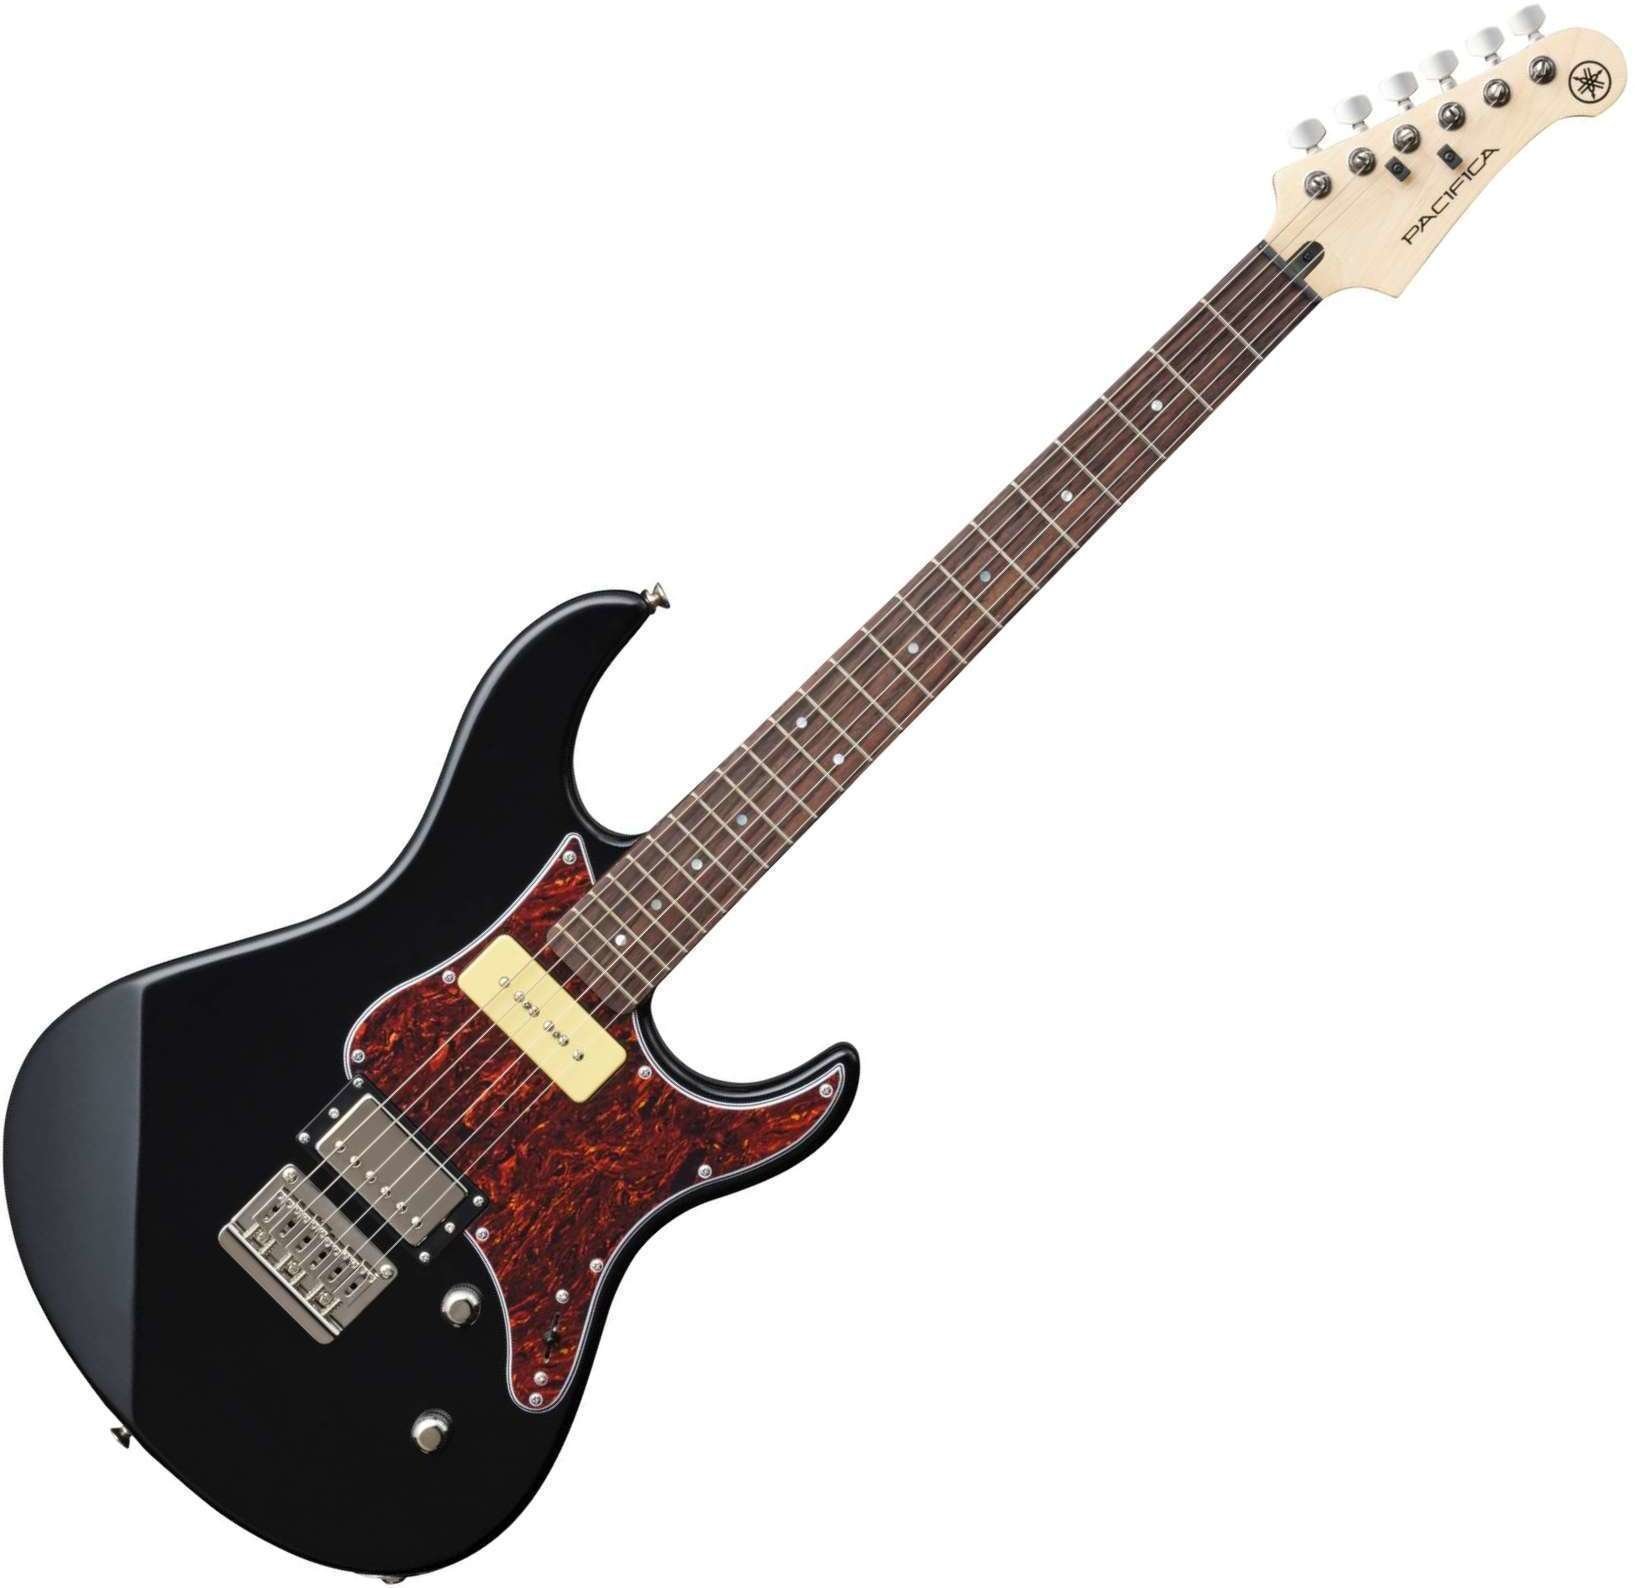 Electric guitar Yamaha Pacifica 311 H Black